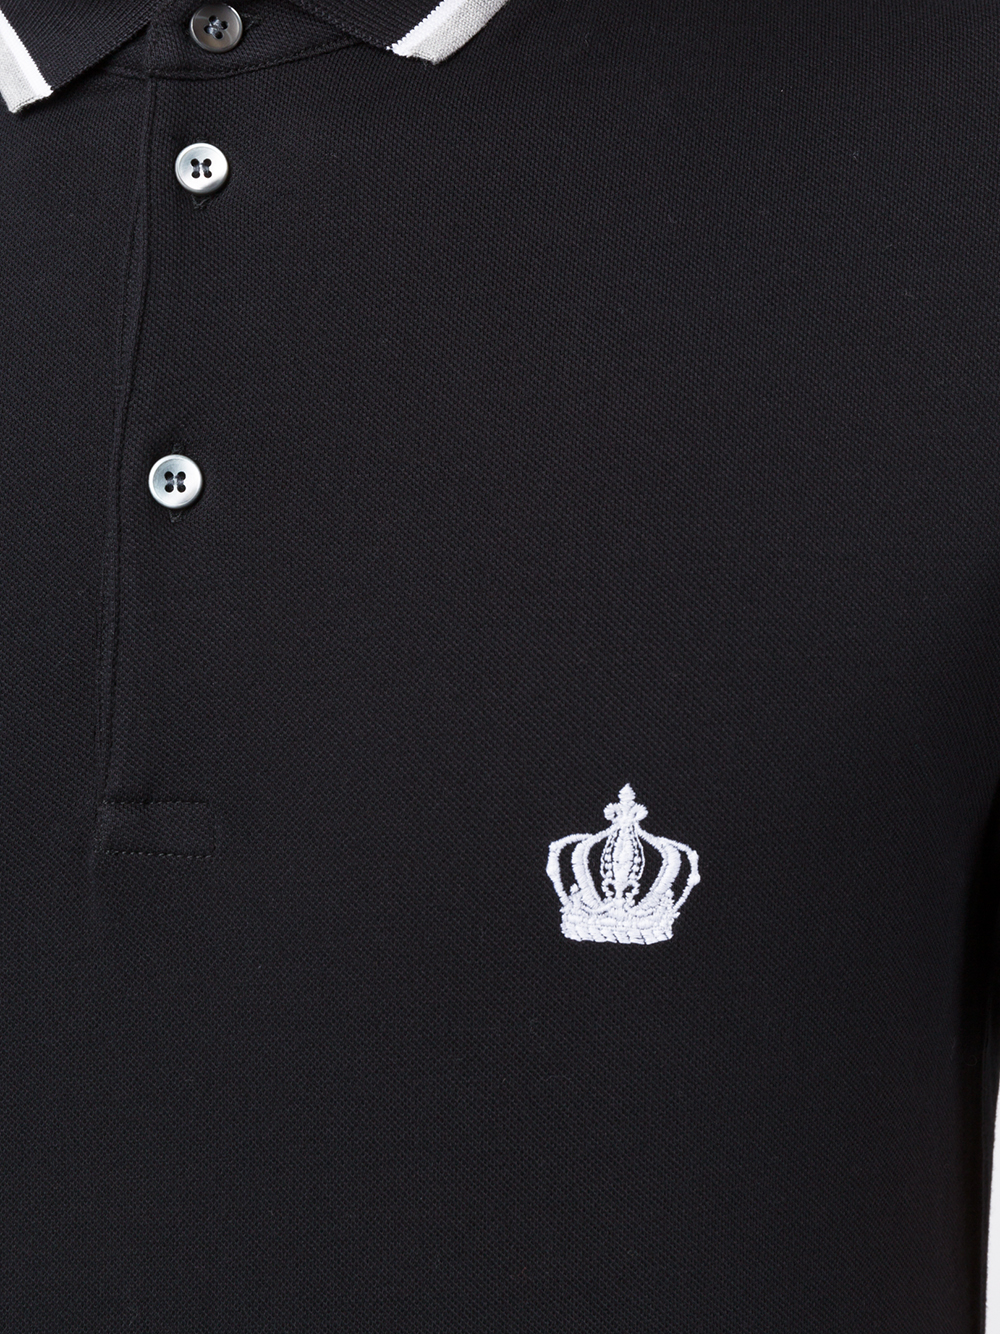 Dolce & Gabbana Crown Polo Shirt in Black for Men - Lyst